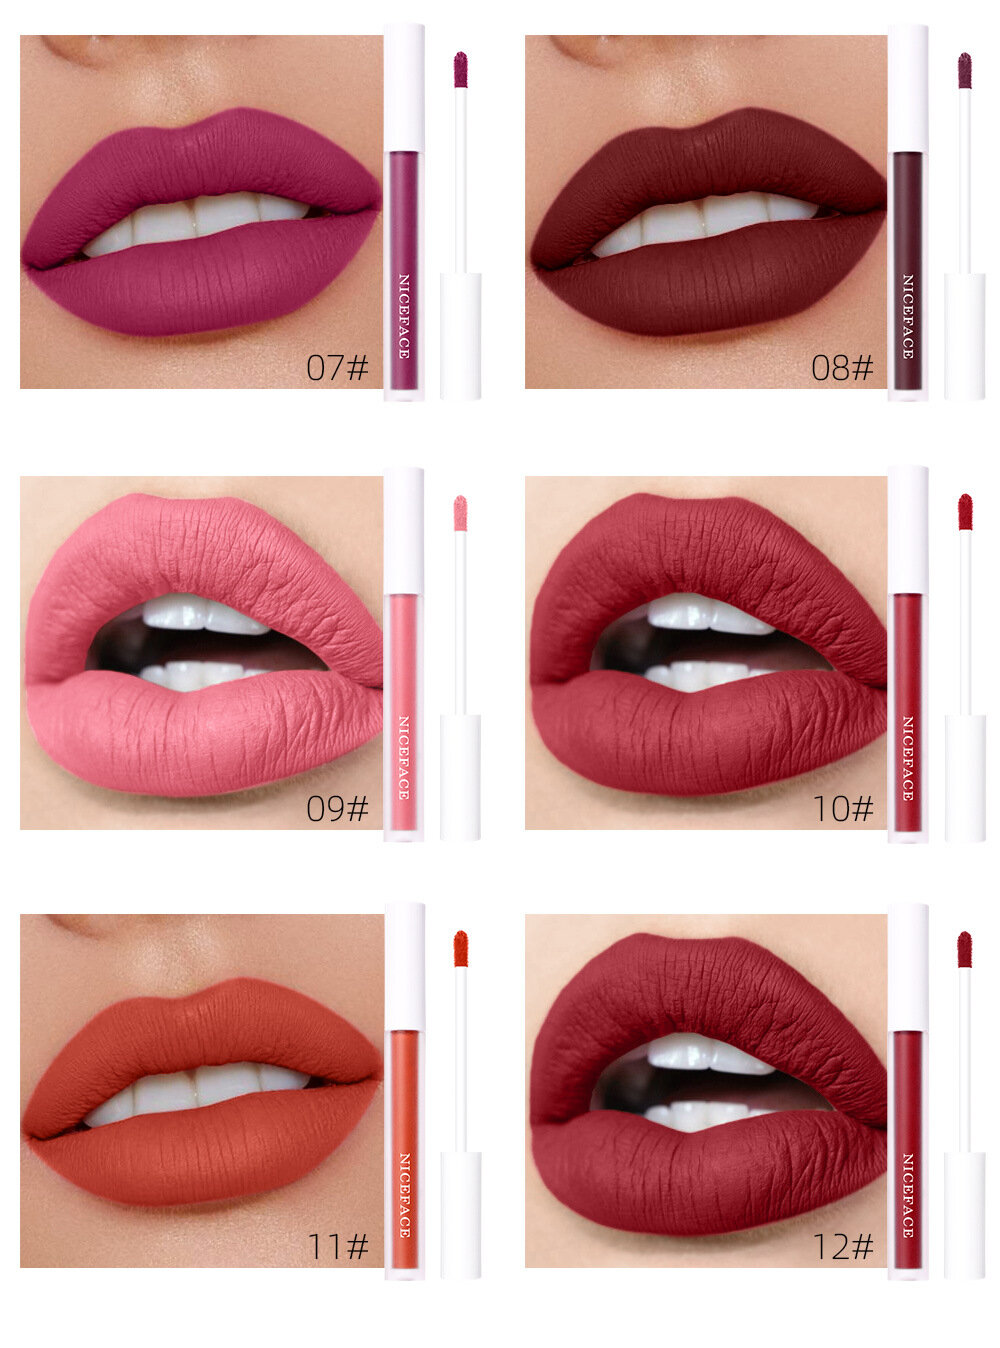 12 Color Matte Nude Lip Gloss Waterproof Lasting Moisturize Non-Stick Cup Women Makeup Lipstick